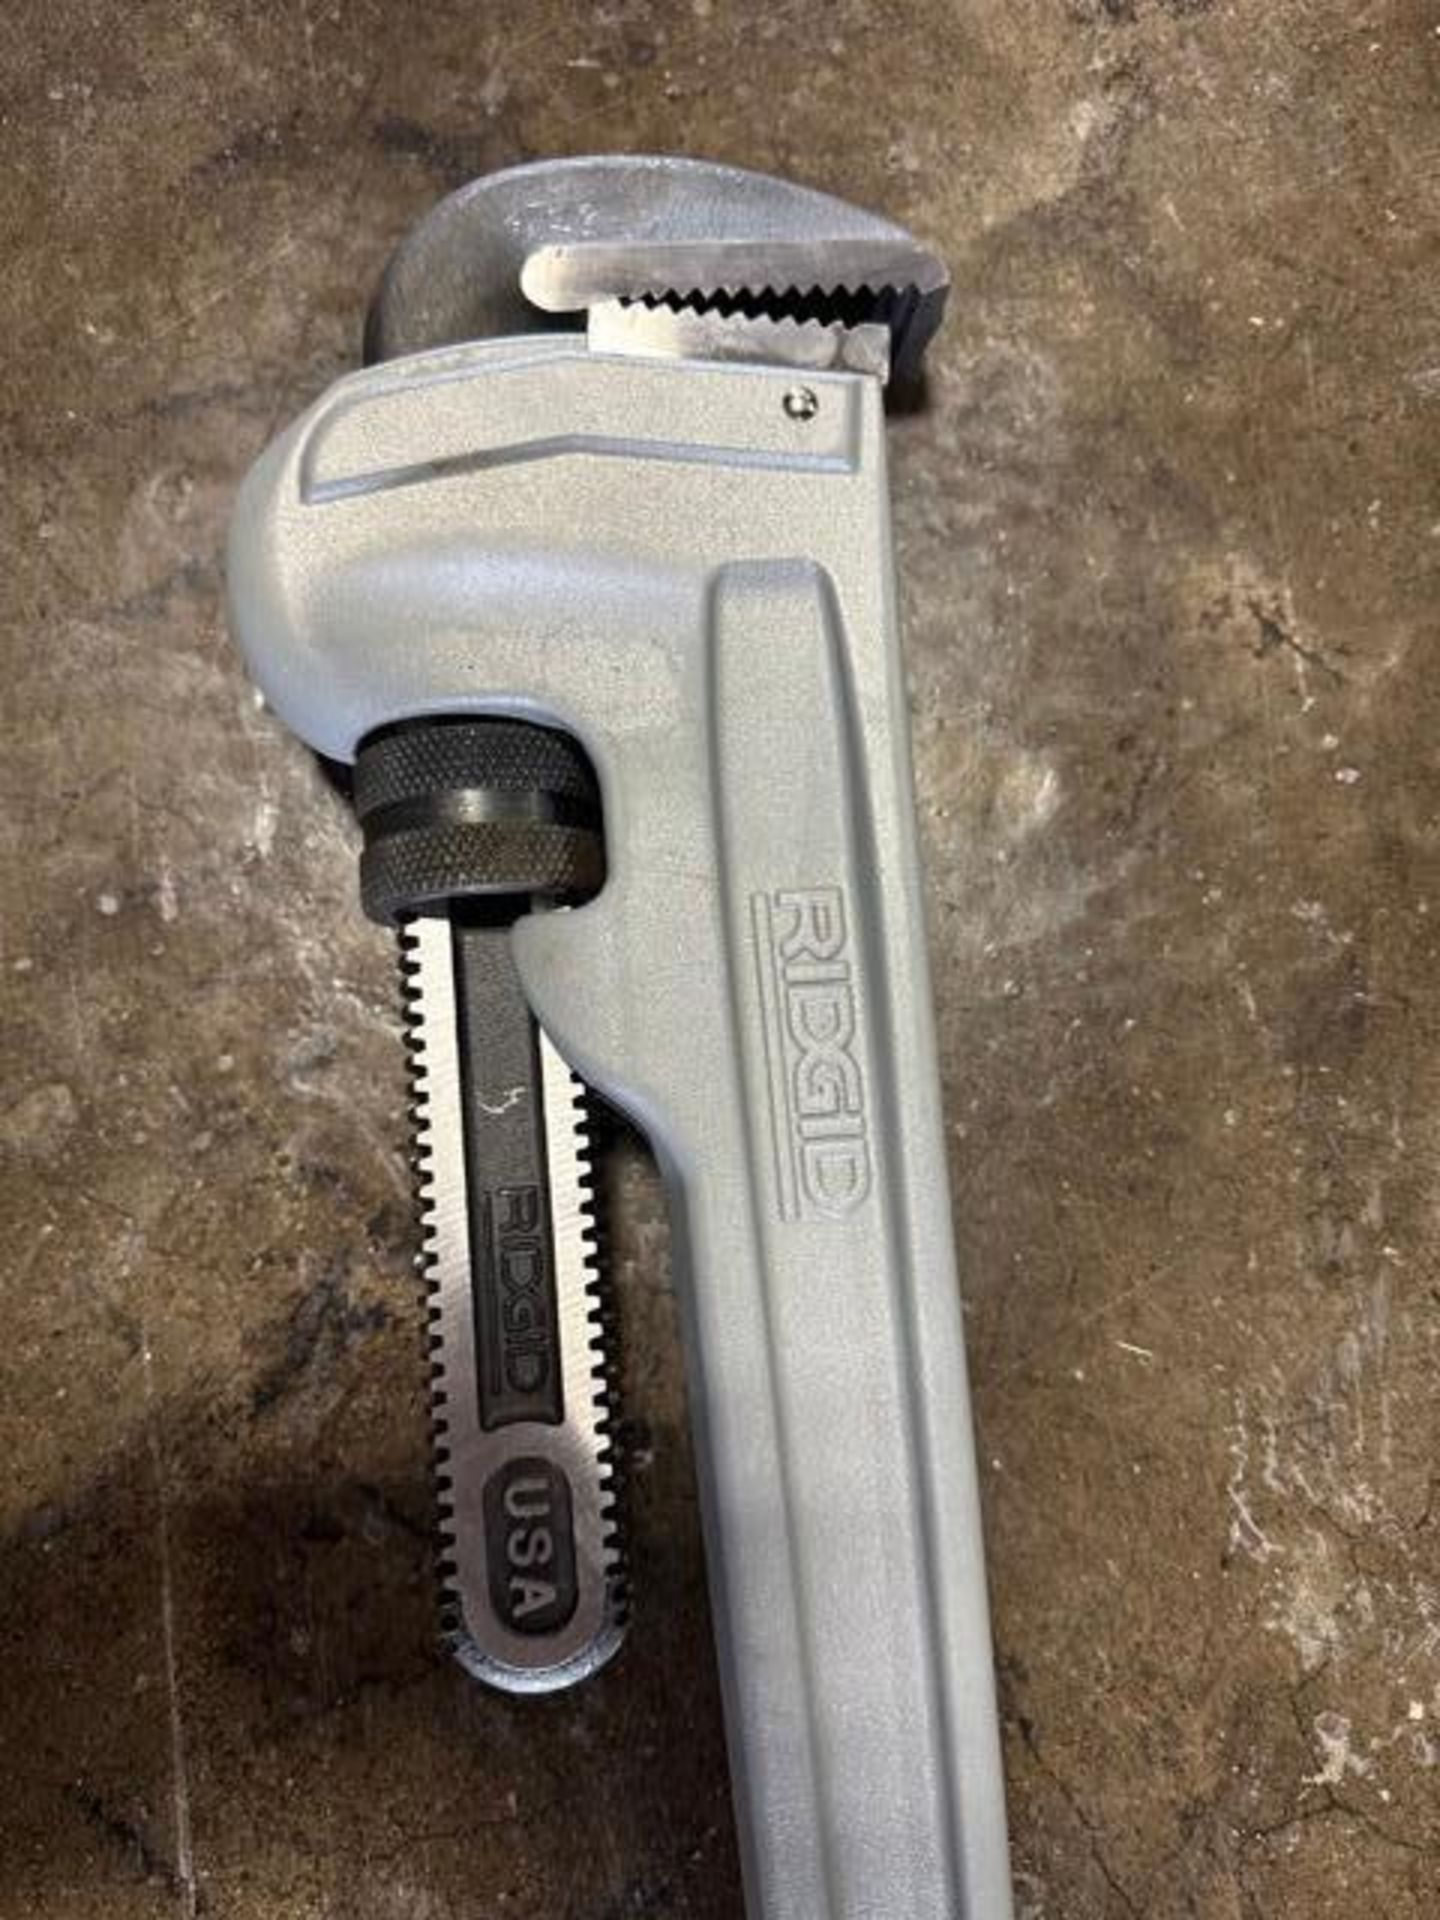 NEW Rigid 36" aluminum pipe wrench - Image 2 of 3